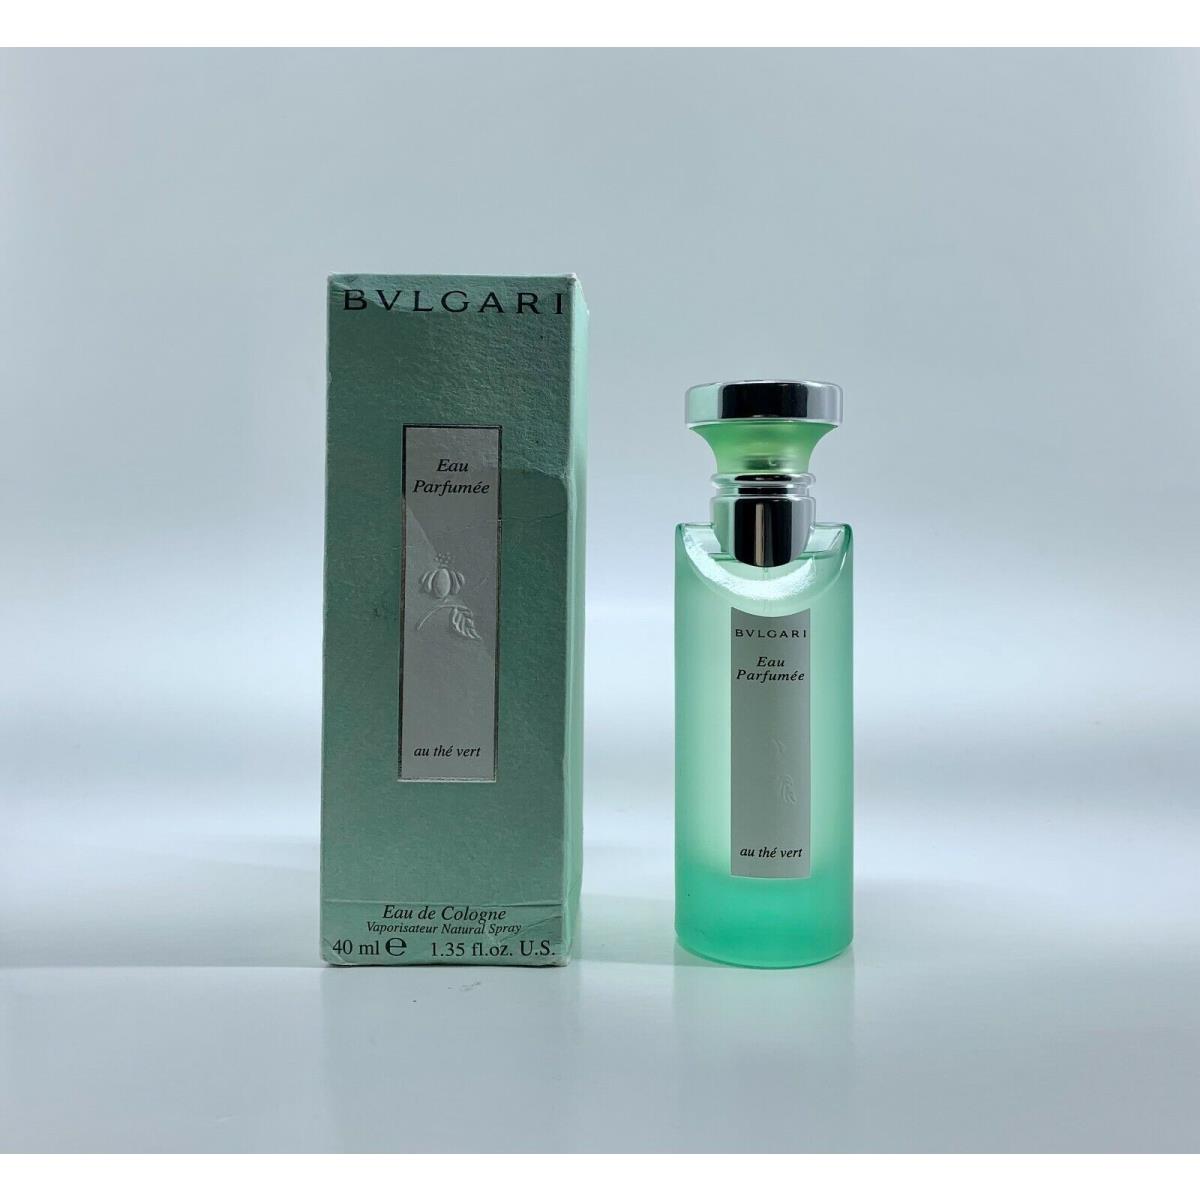 Bvlgari Eau Parfumee Au The Vert Eau de Cologne - 1.35 oz / 40 ml